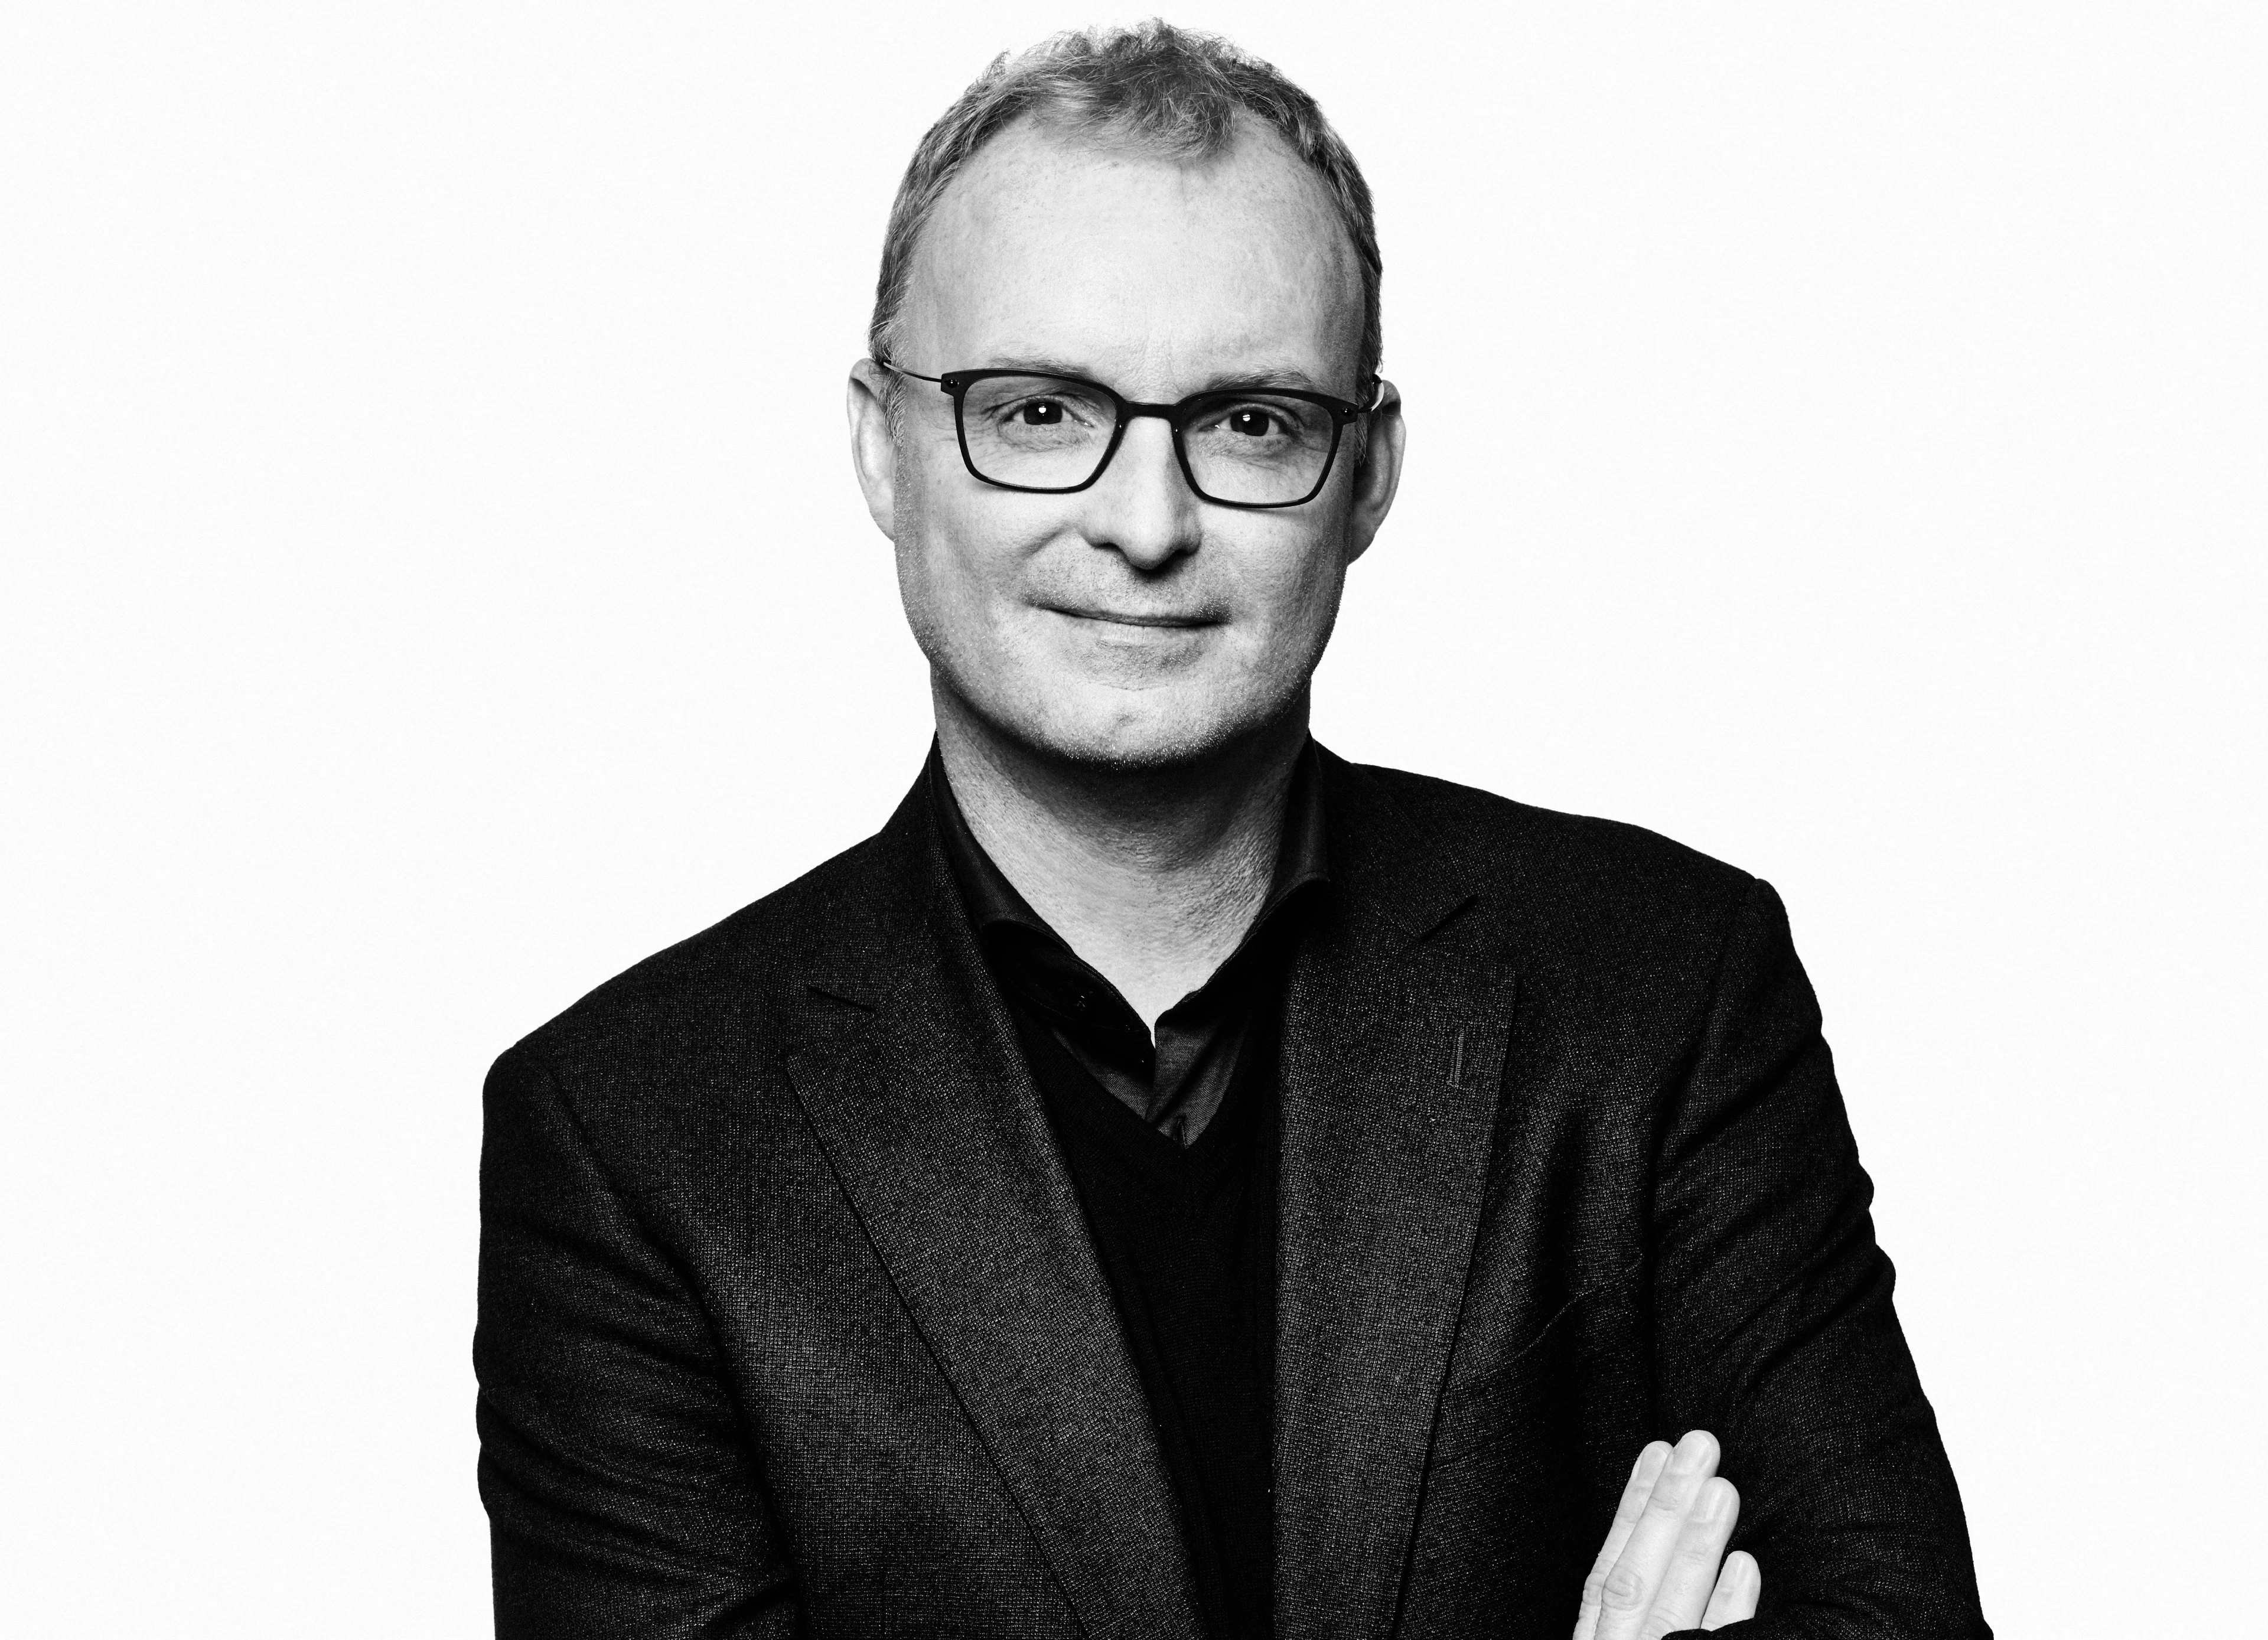 Portret of Erik Roddenhof in black and white